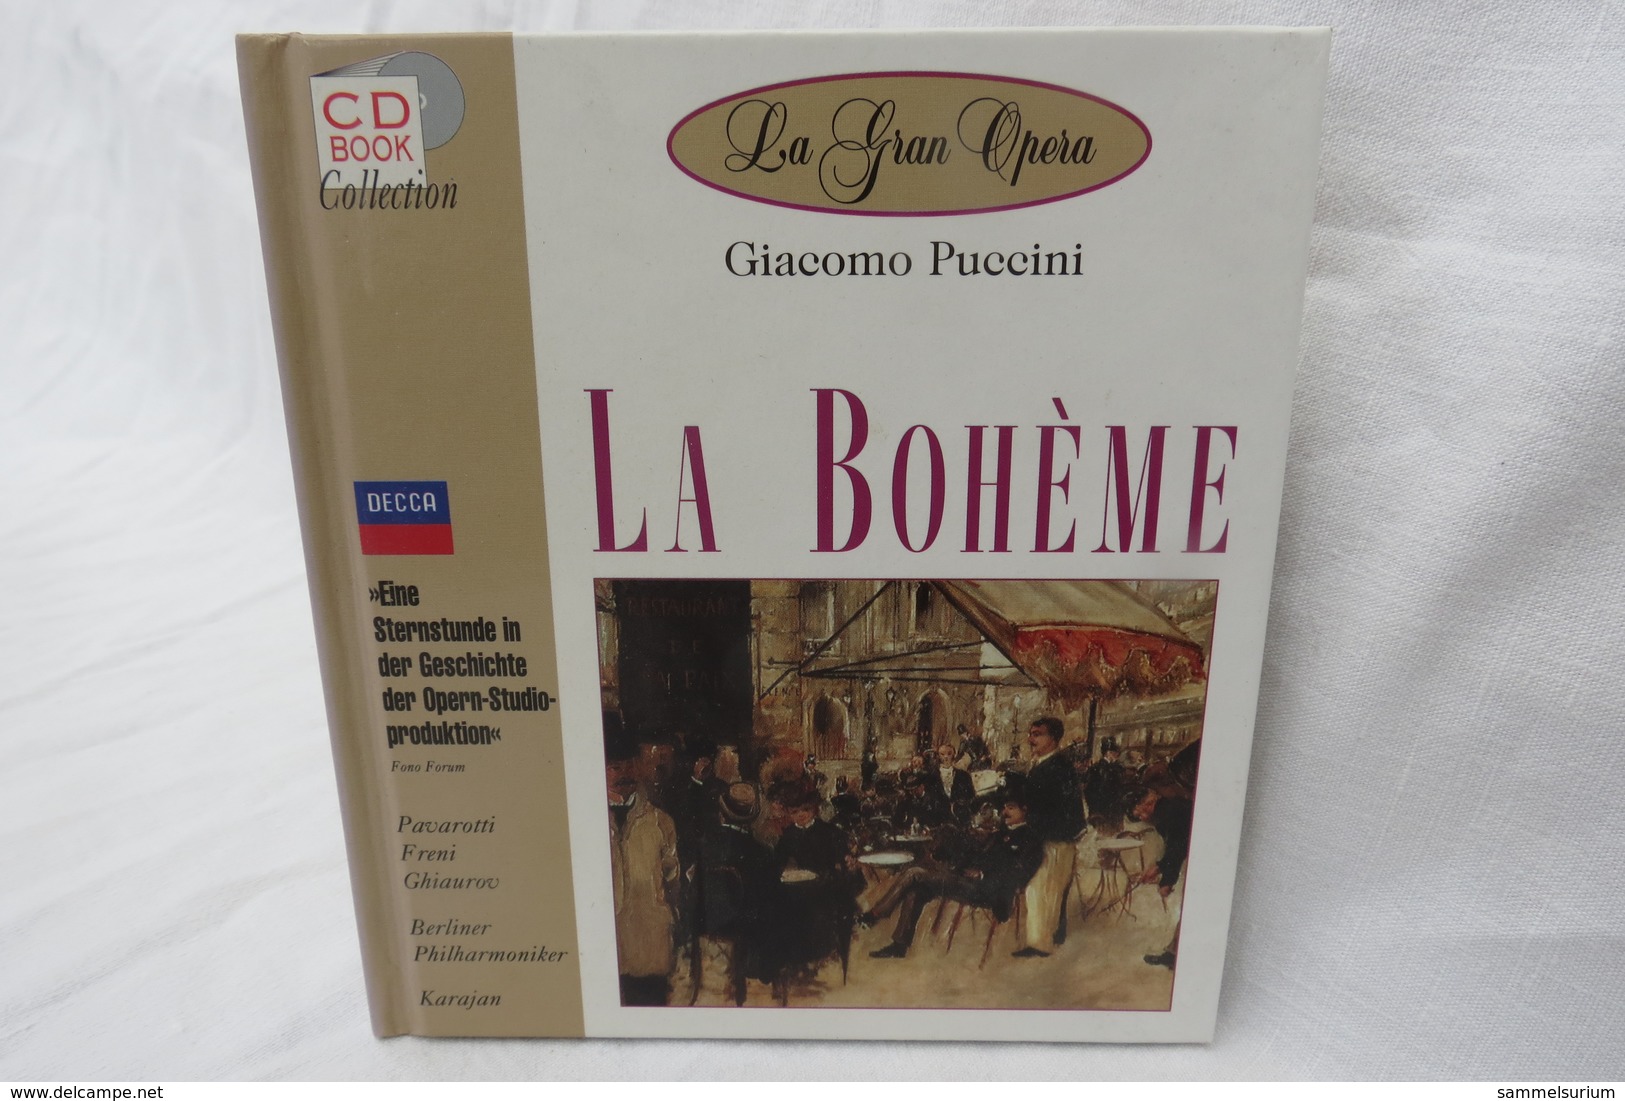 CD "La Bohème / Giacomo Puccini" Mit Buch Aus Der CD Book Collection (gepflegter Zustand) - Opéra & Opérette